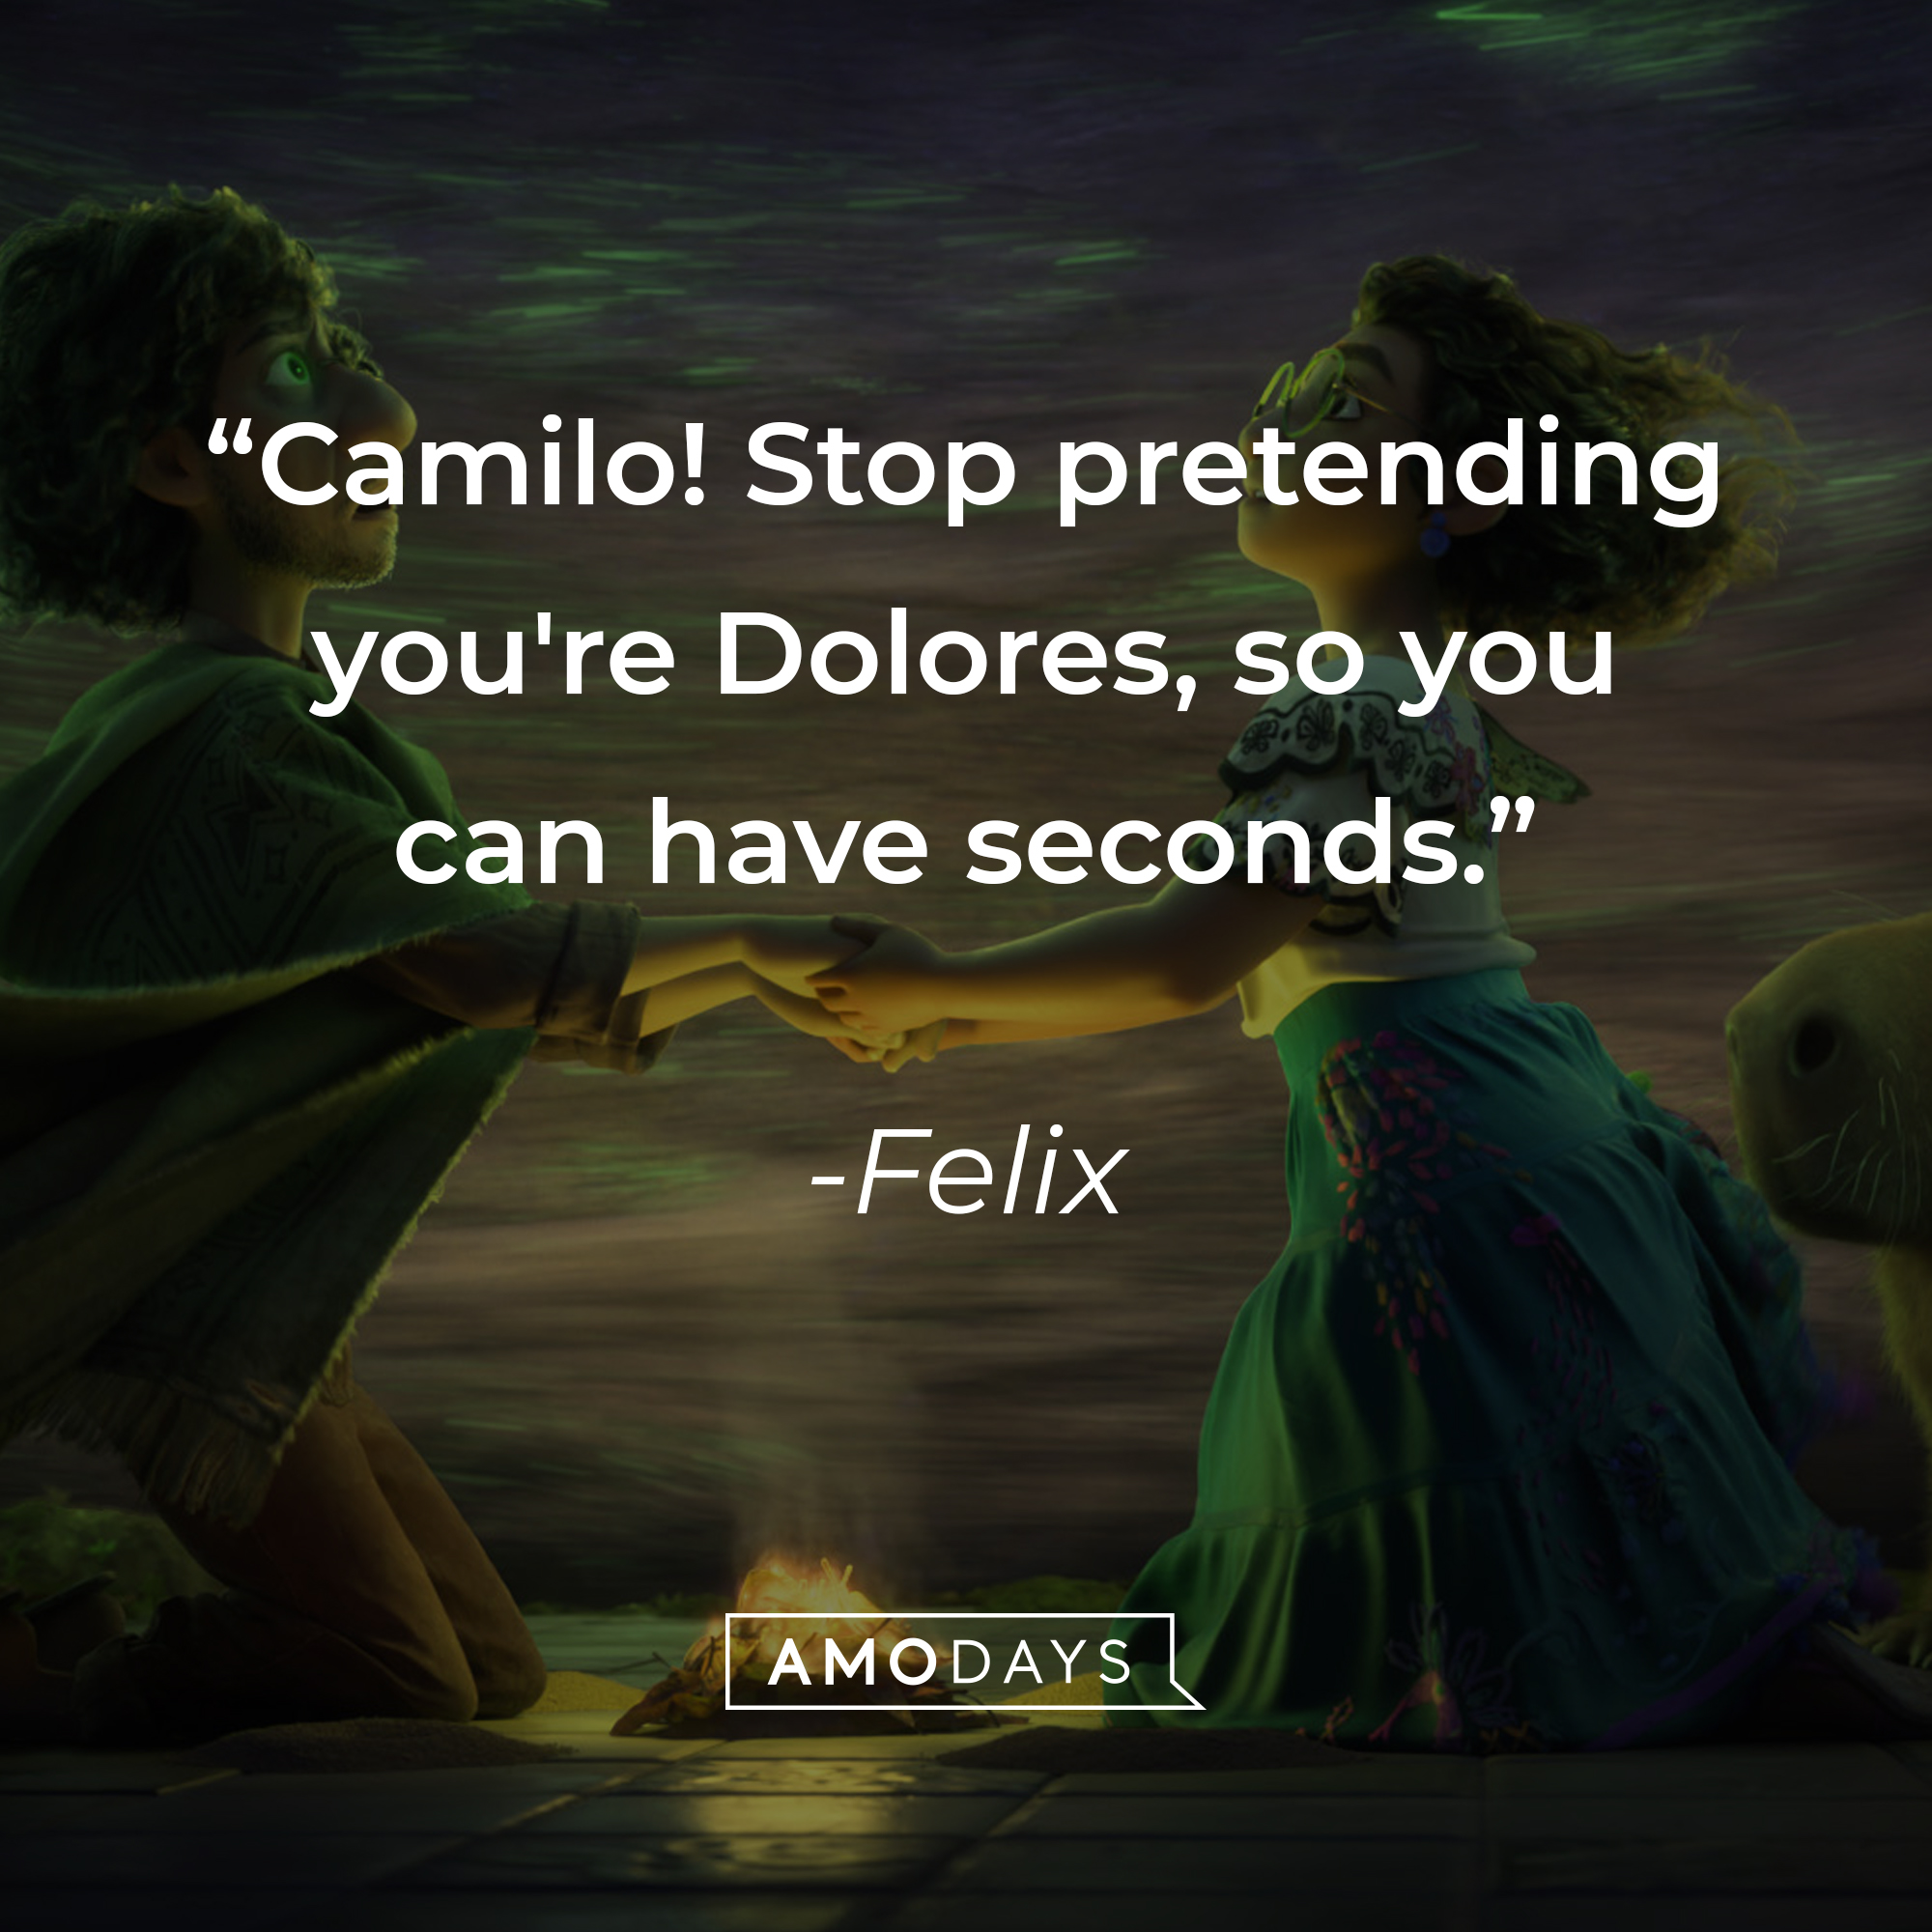 Felix's quote: "Camilo! Stop pretending you're Dolores, so you can have seconds." | Source: facebook.com/EncantoMovie